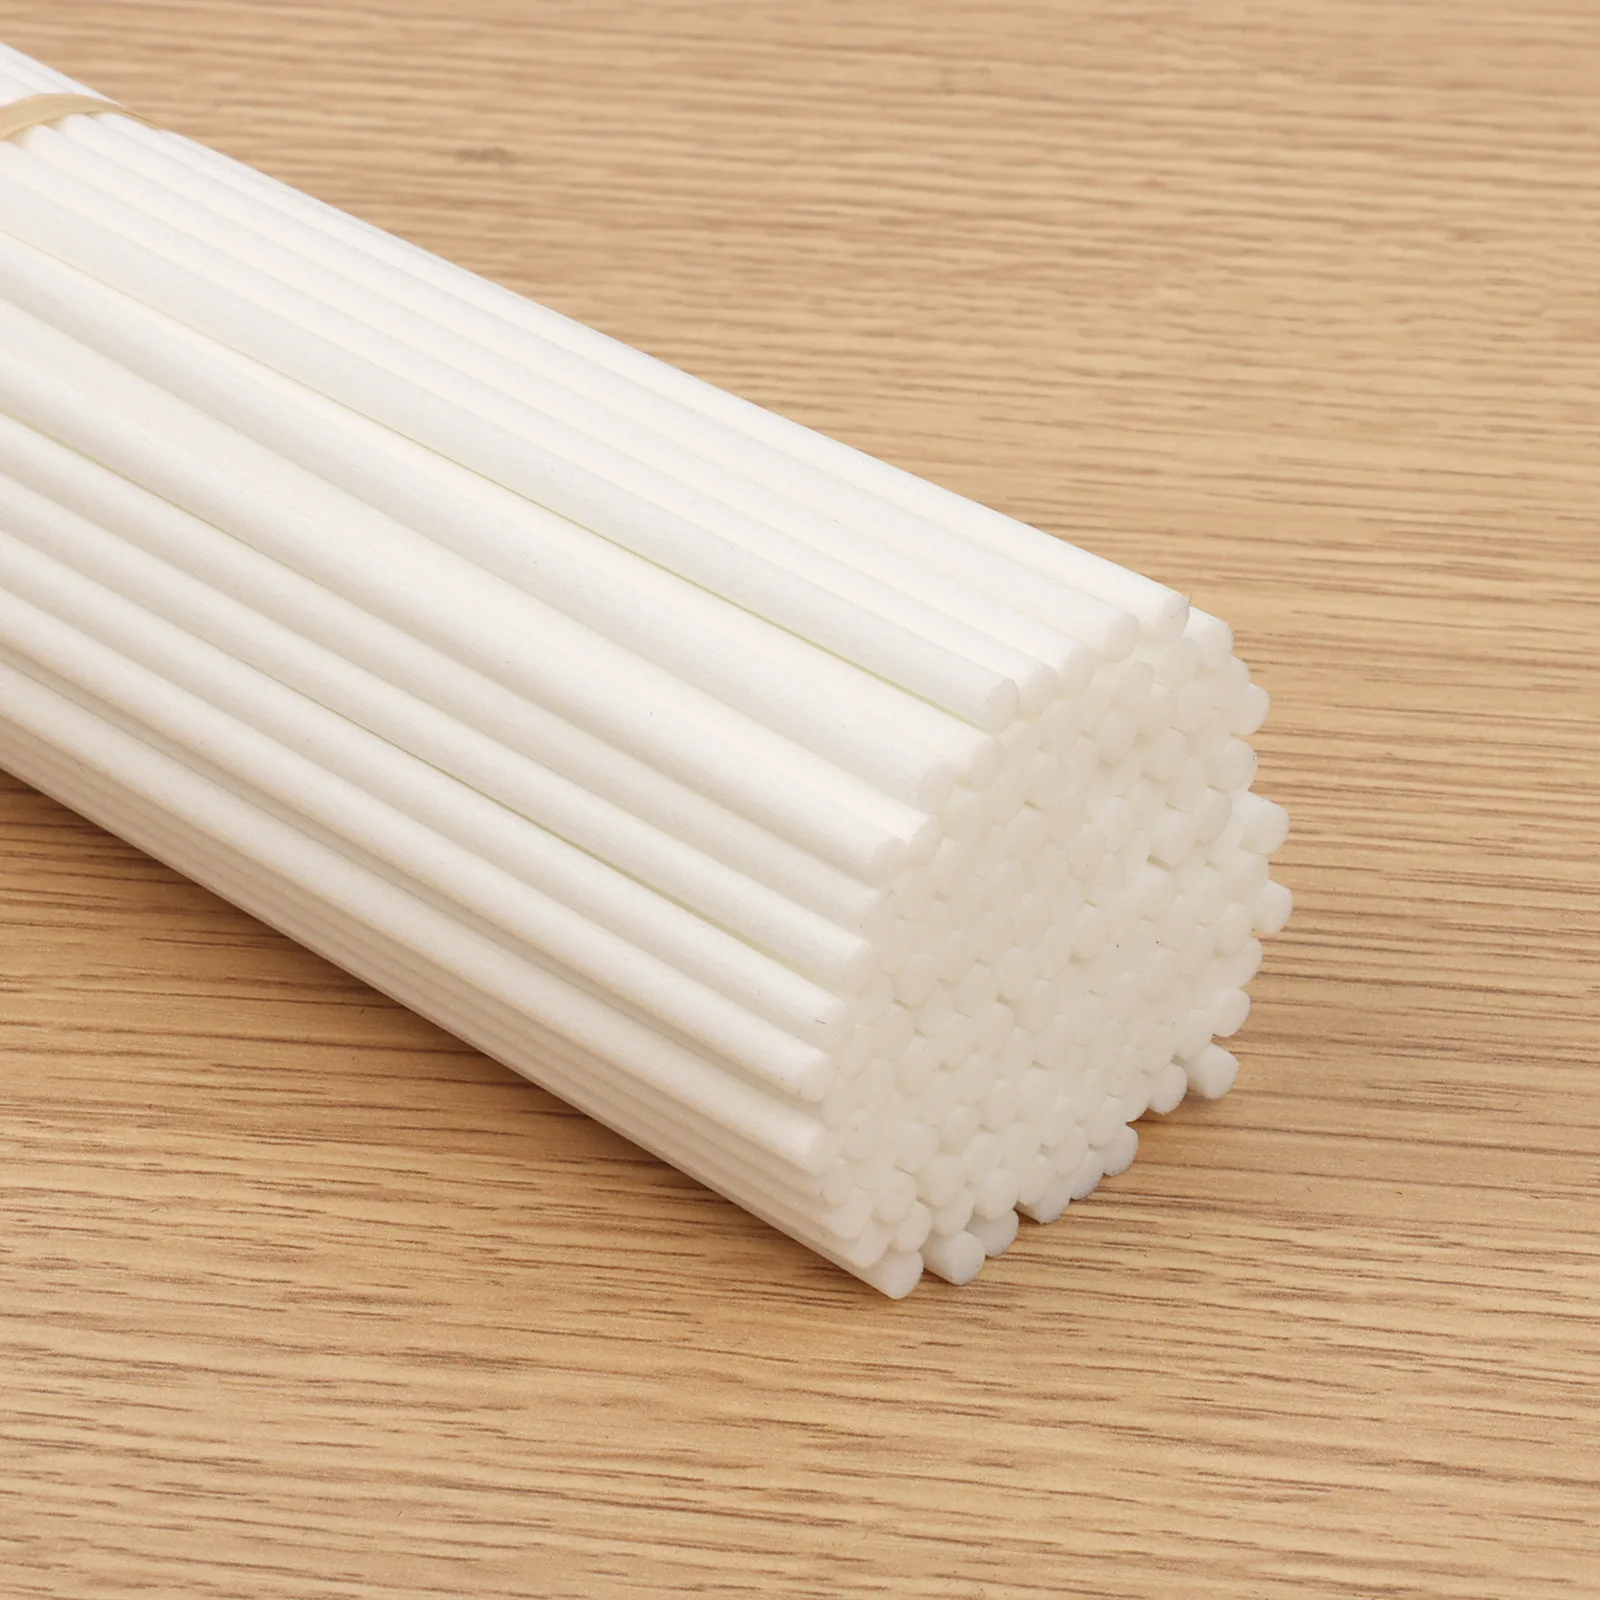 

1000PCS 3MM X L30/25/22/23/15CM Premium White Fibre Sticks for Home Reed Diffuser, Essential Oil Rattan Sticks for Home Decor